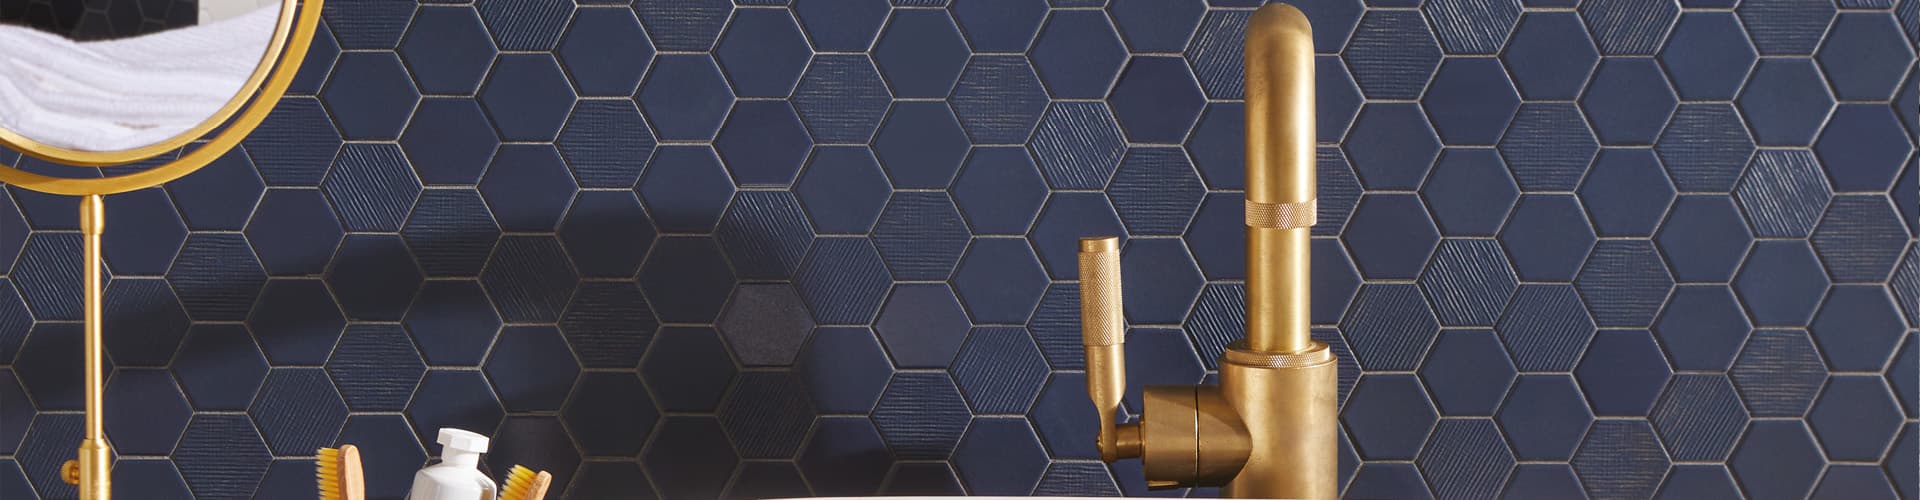 Hexagonal Bathroom Tiles